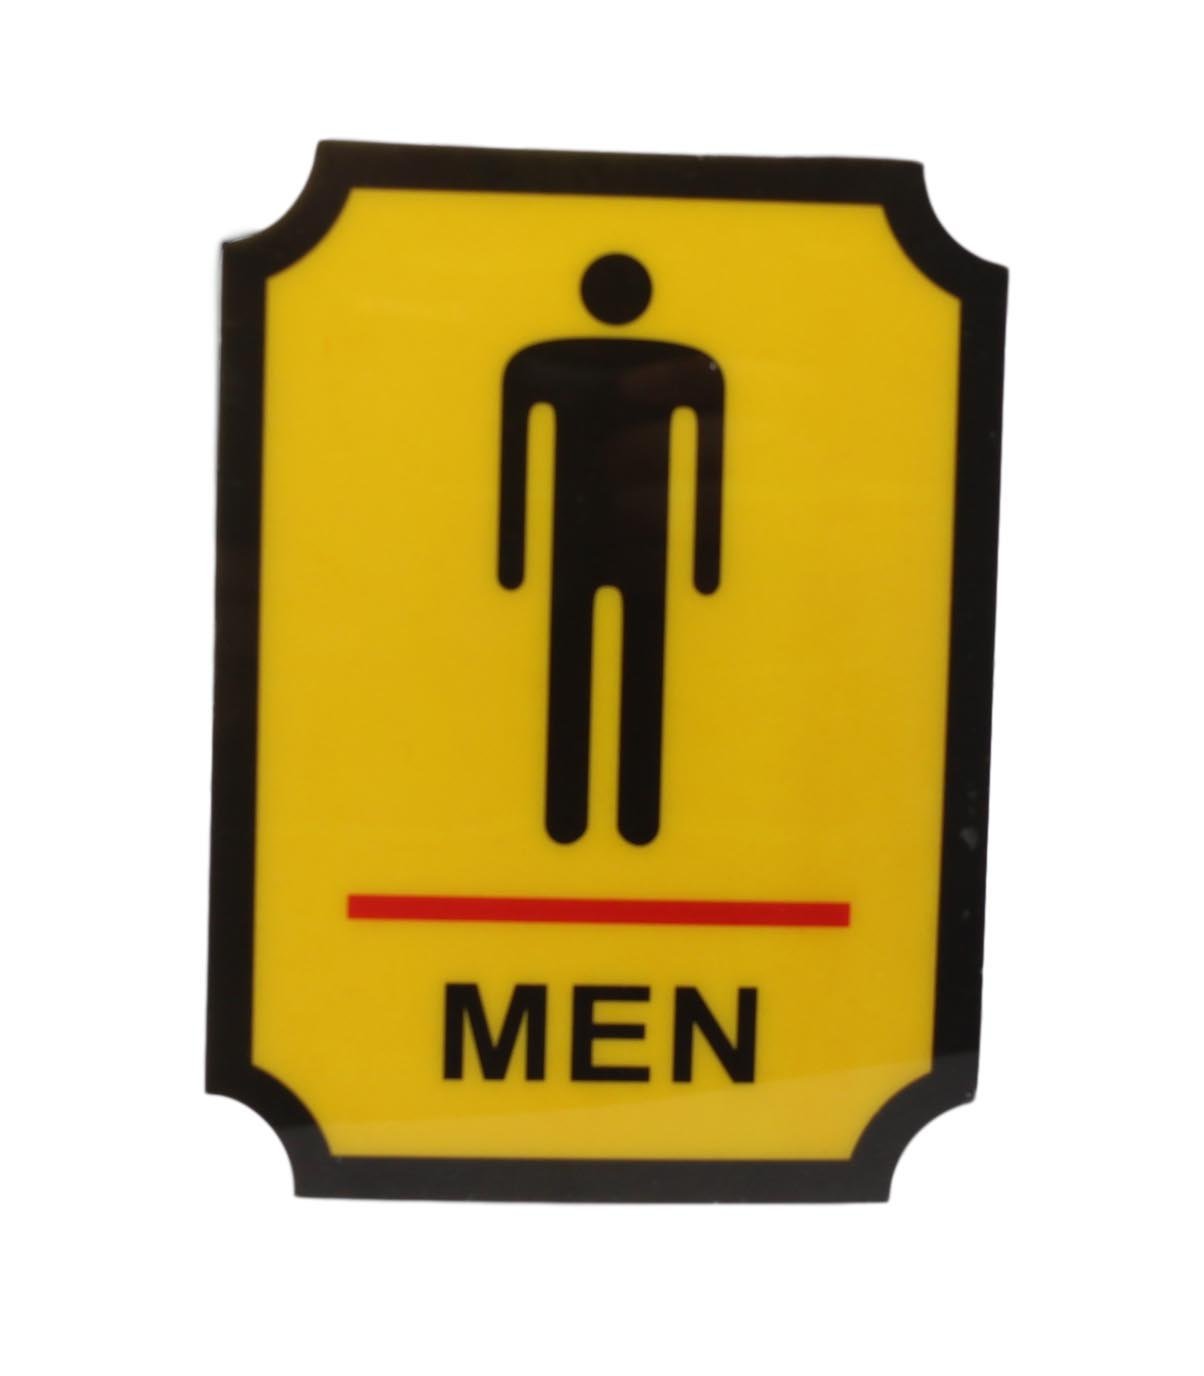 Toilet Door Signage Men Sign Adhesive Sticker 12cm x 9cm 5280 (Large Letter Rate)